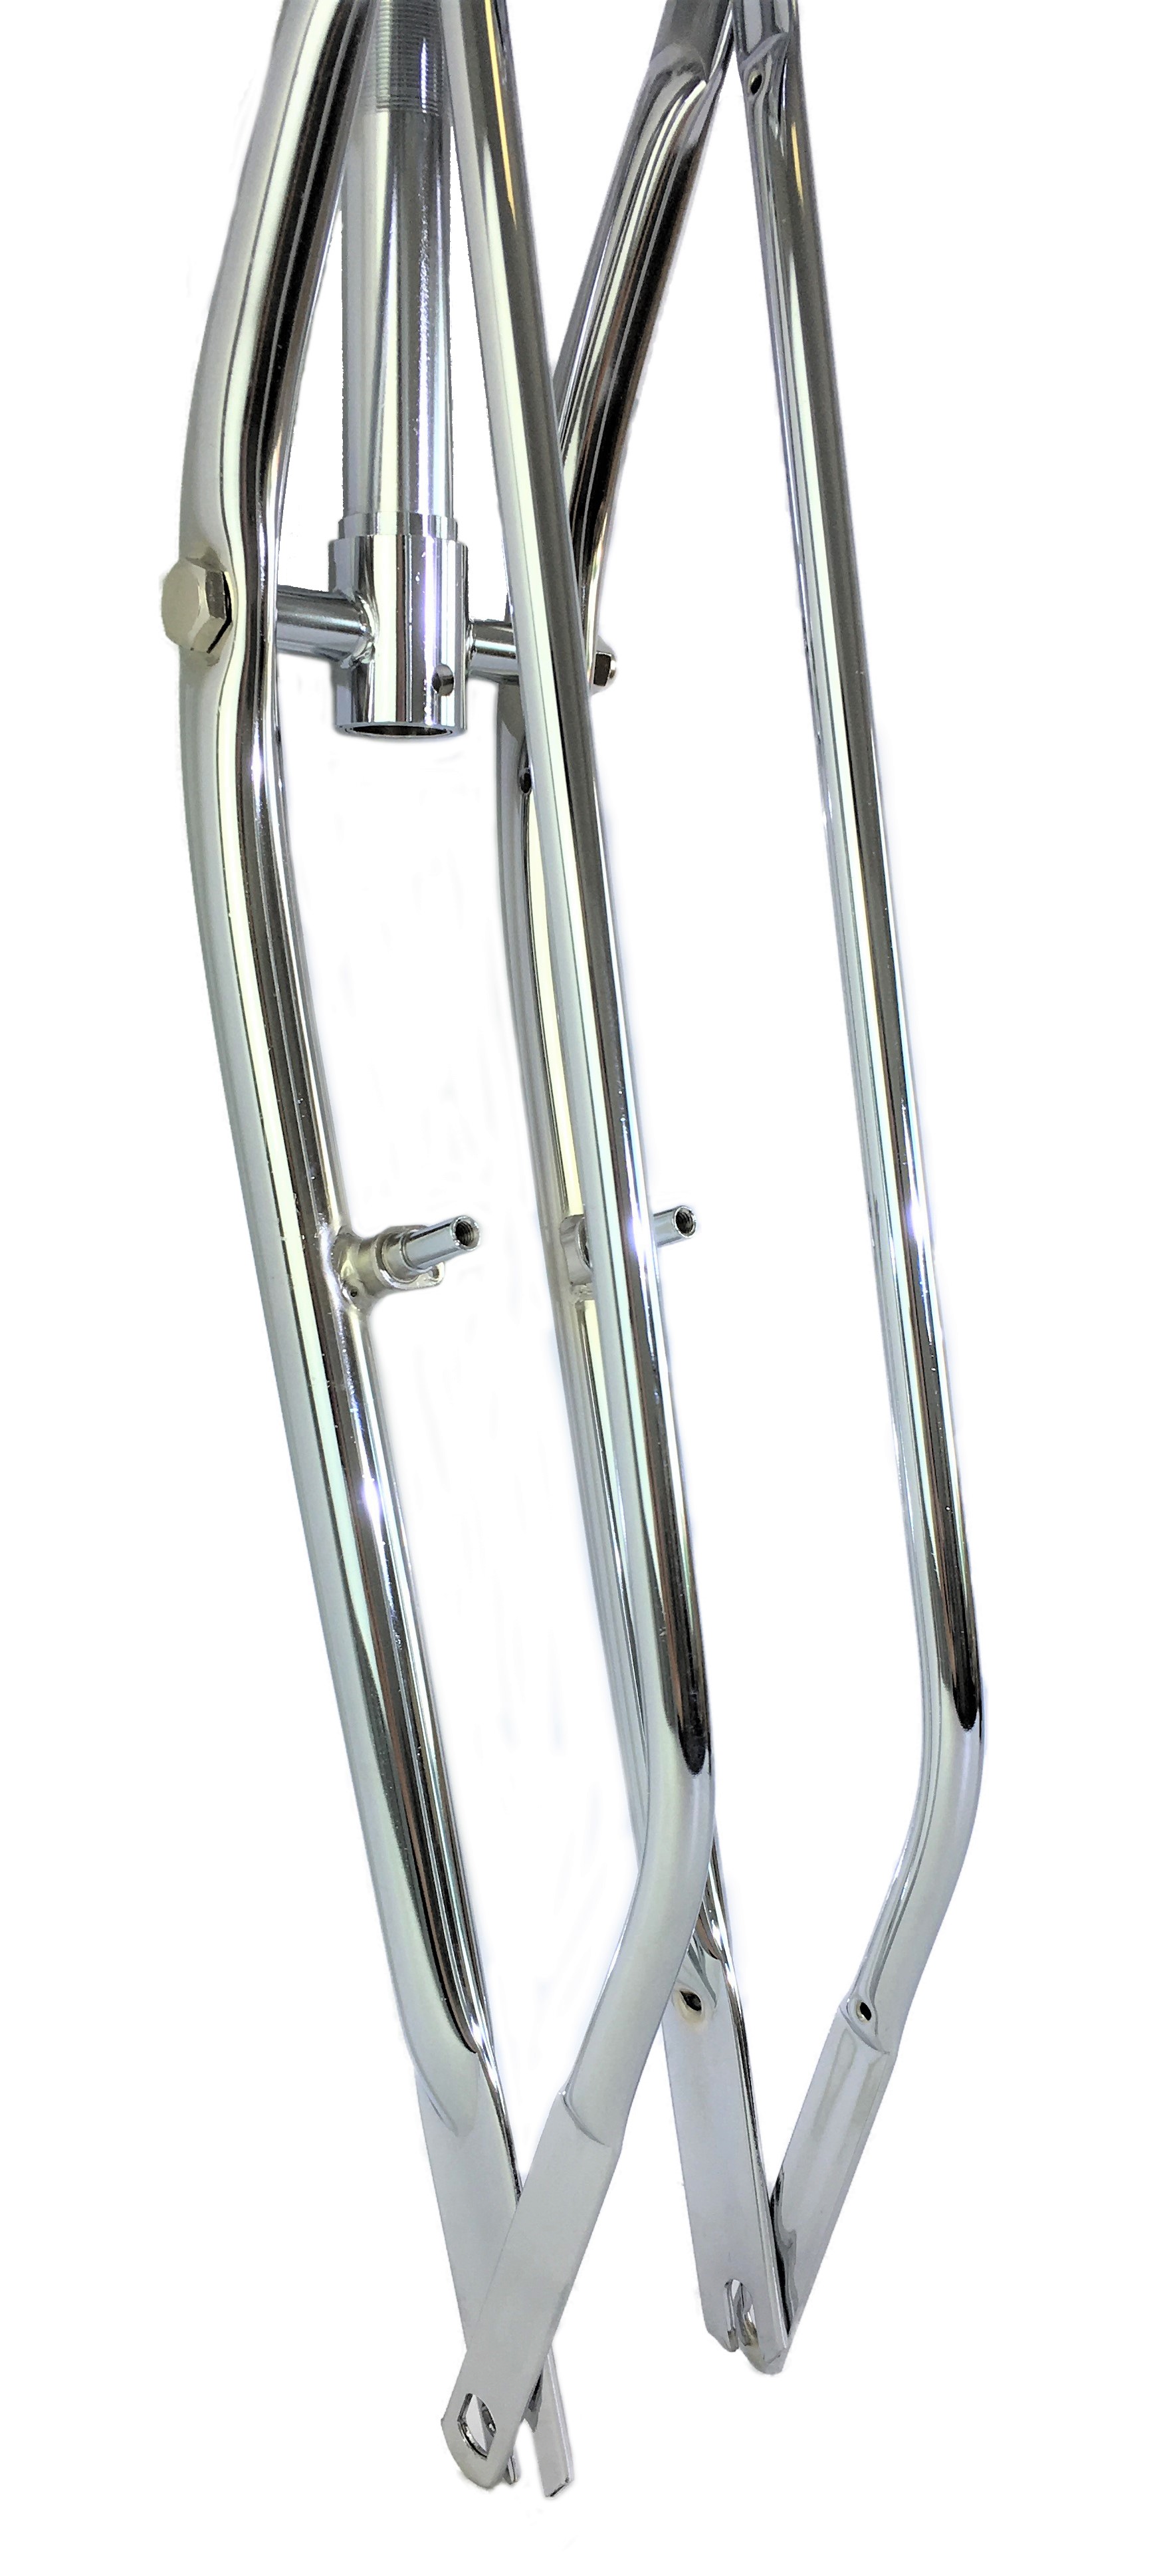 Springer Fork 26 inch. for Cantilevers/V-Brakes